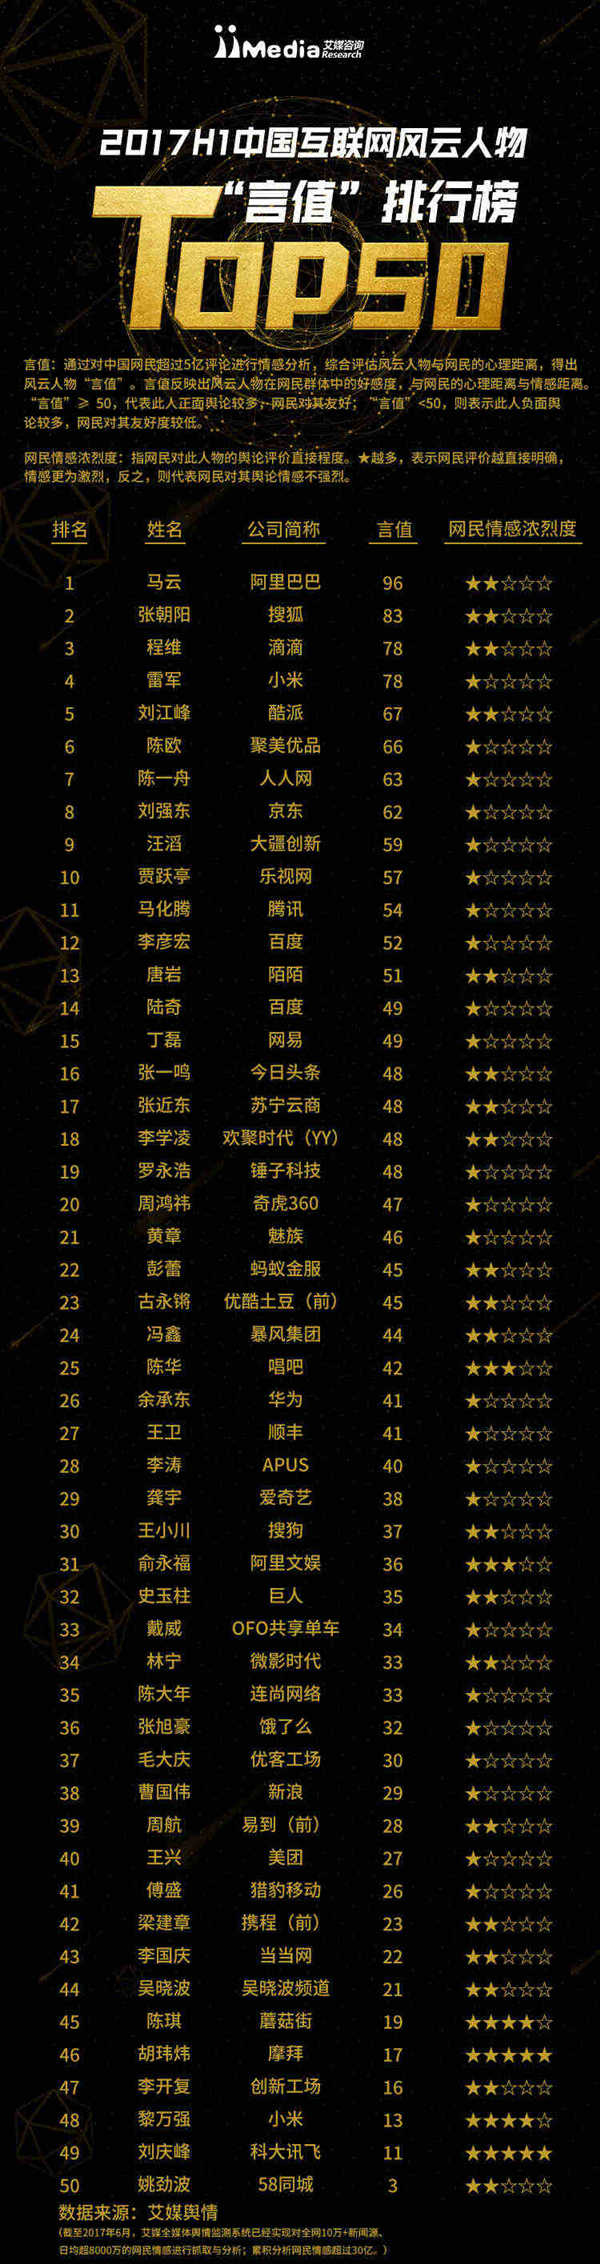 2017h1中国互联网风云人物"言值"排行榜top50_副本.jpg